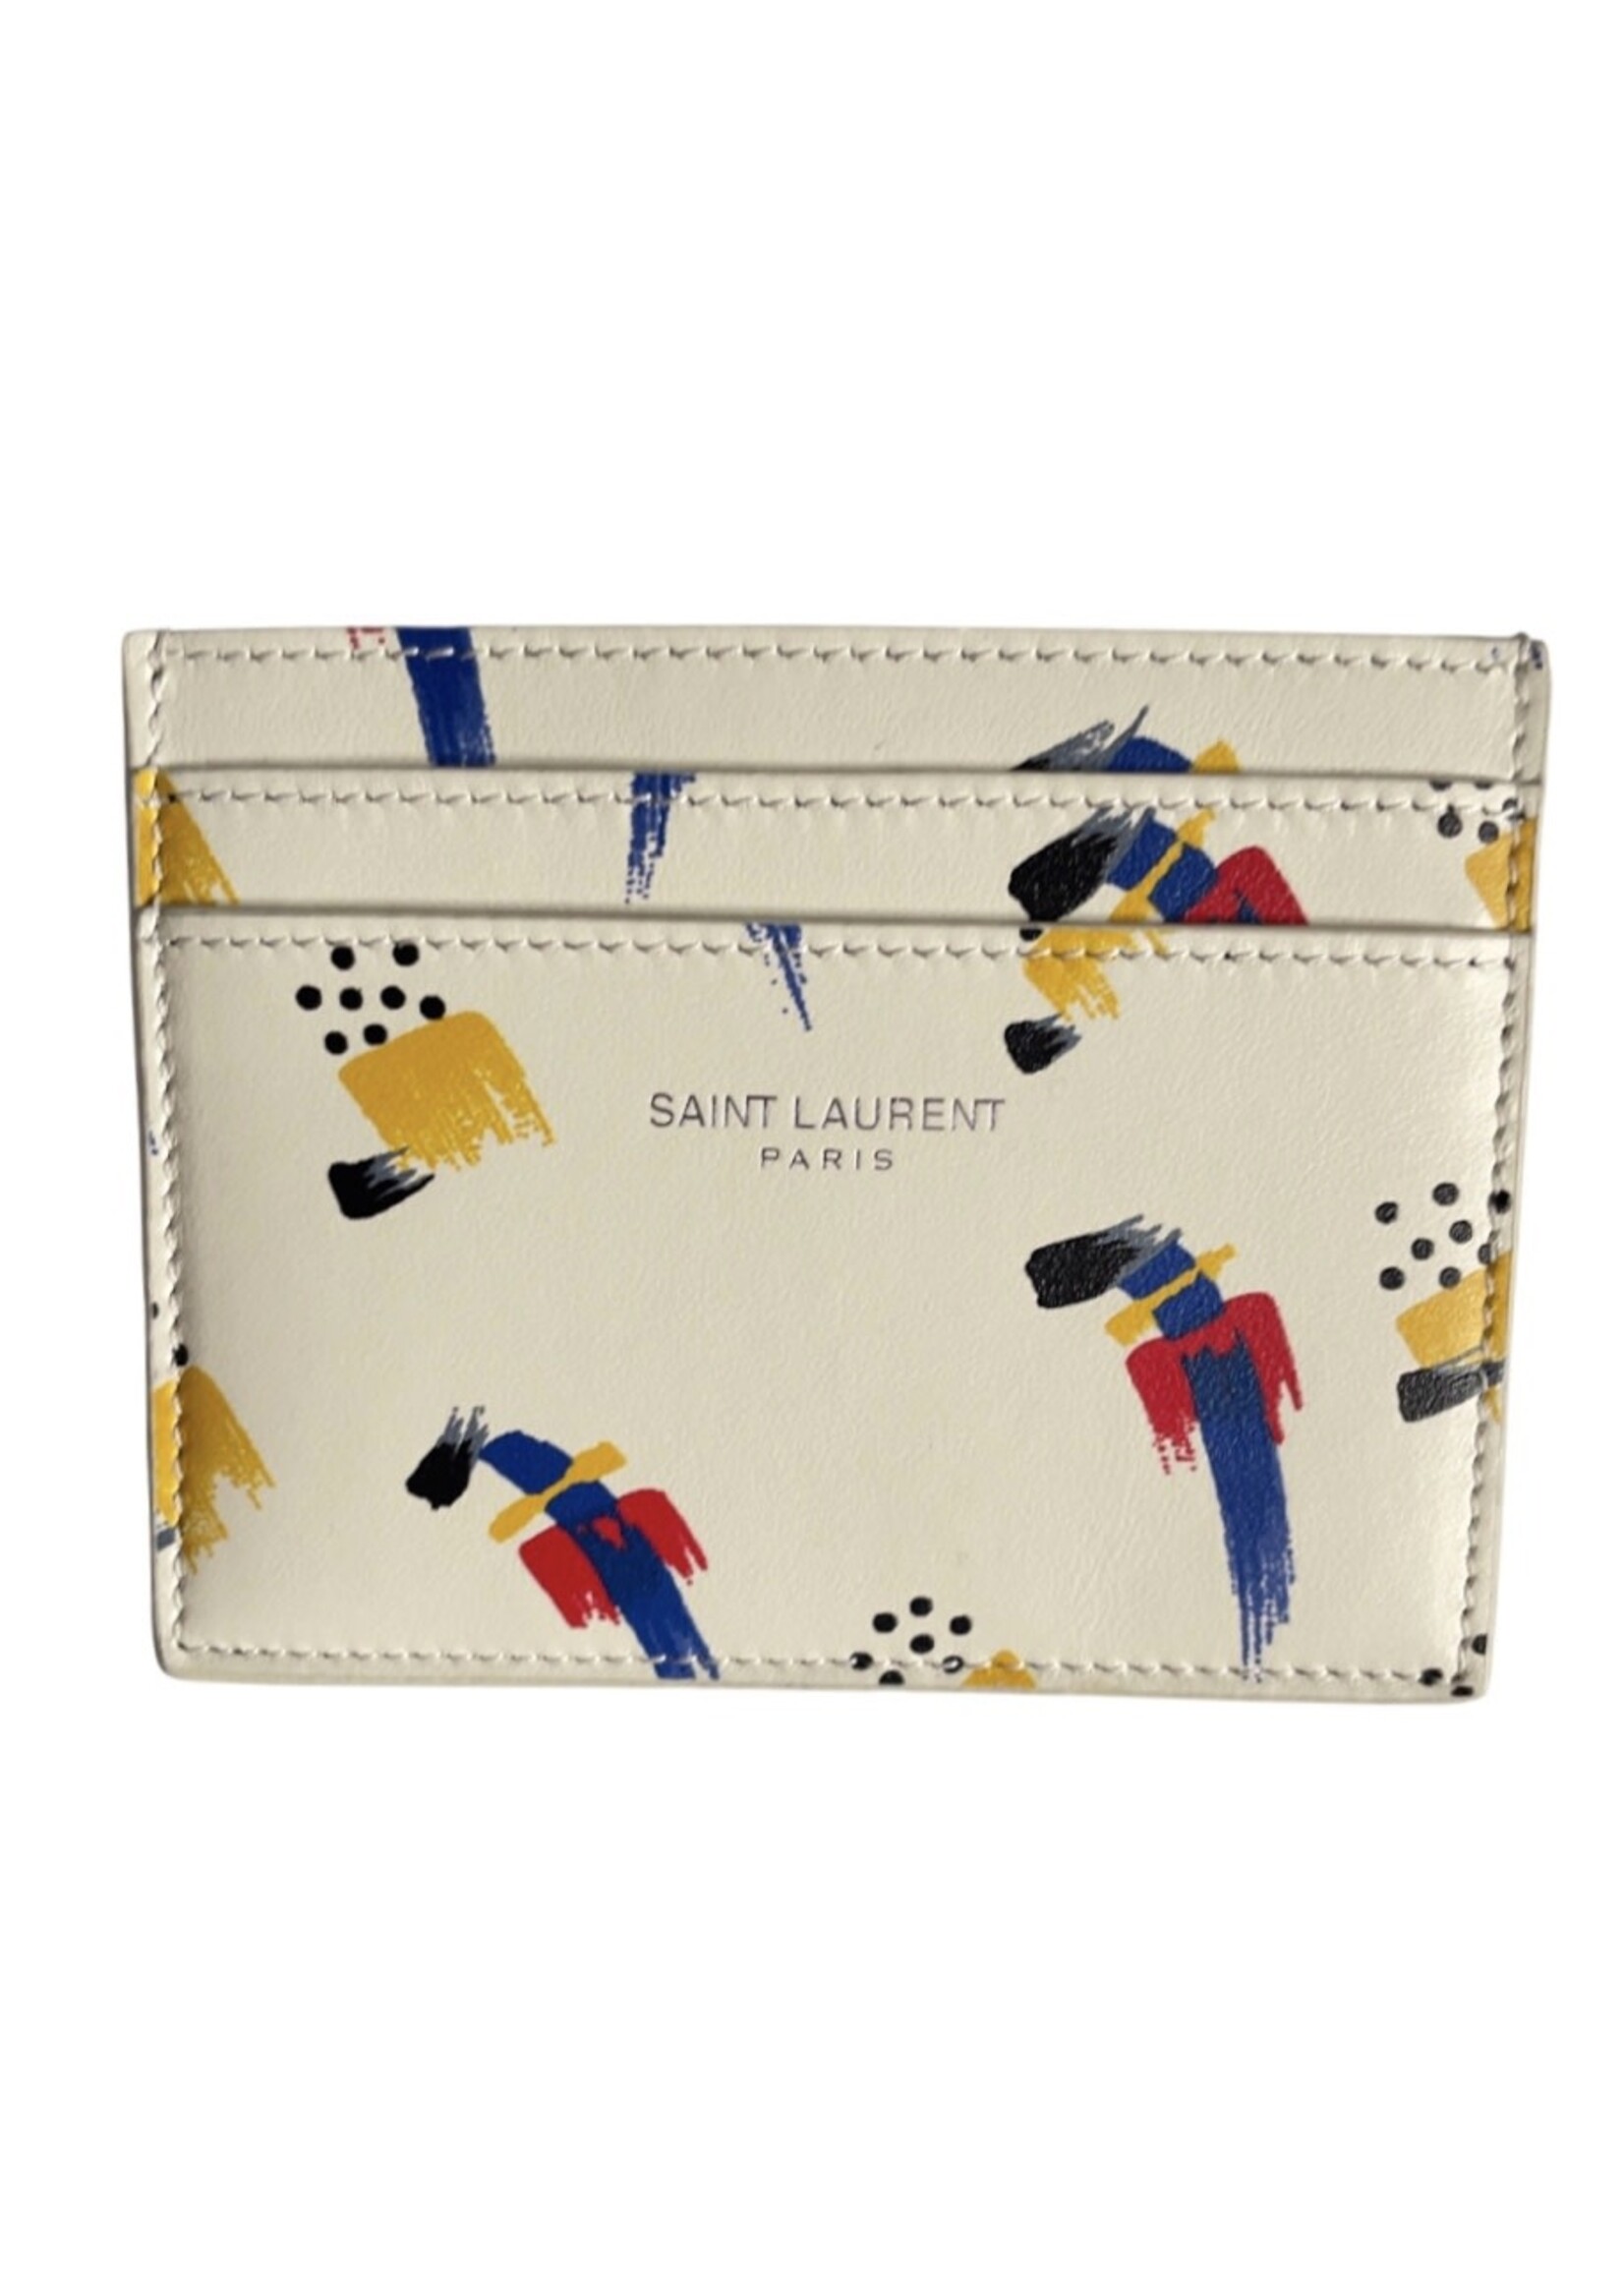 Saint Laurent Paris credit card case in EEL, Saint Laurent, YSL.com in  2023